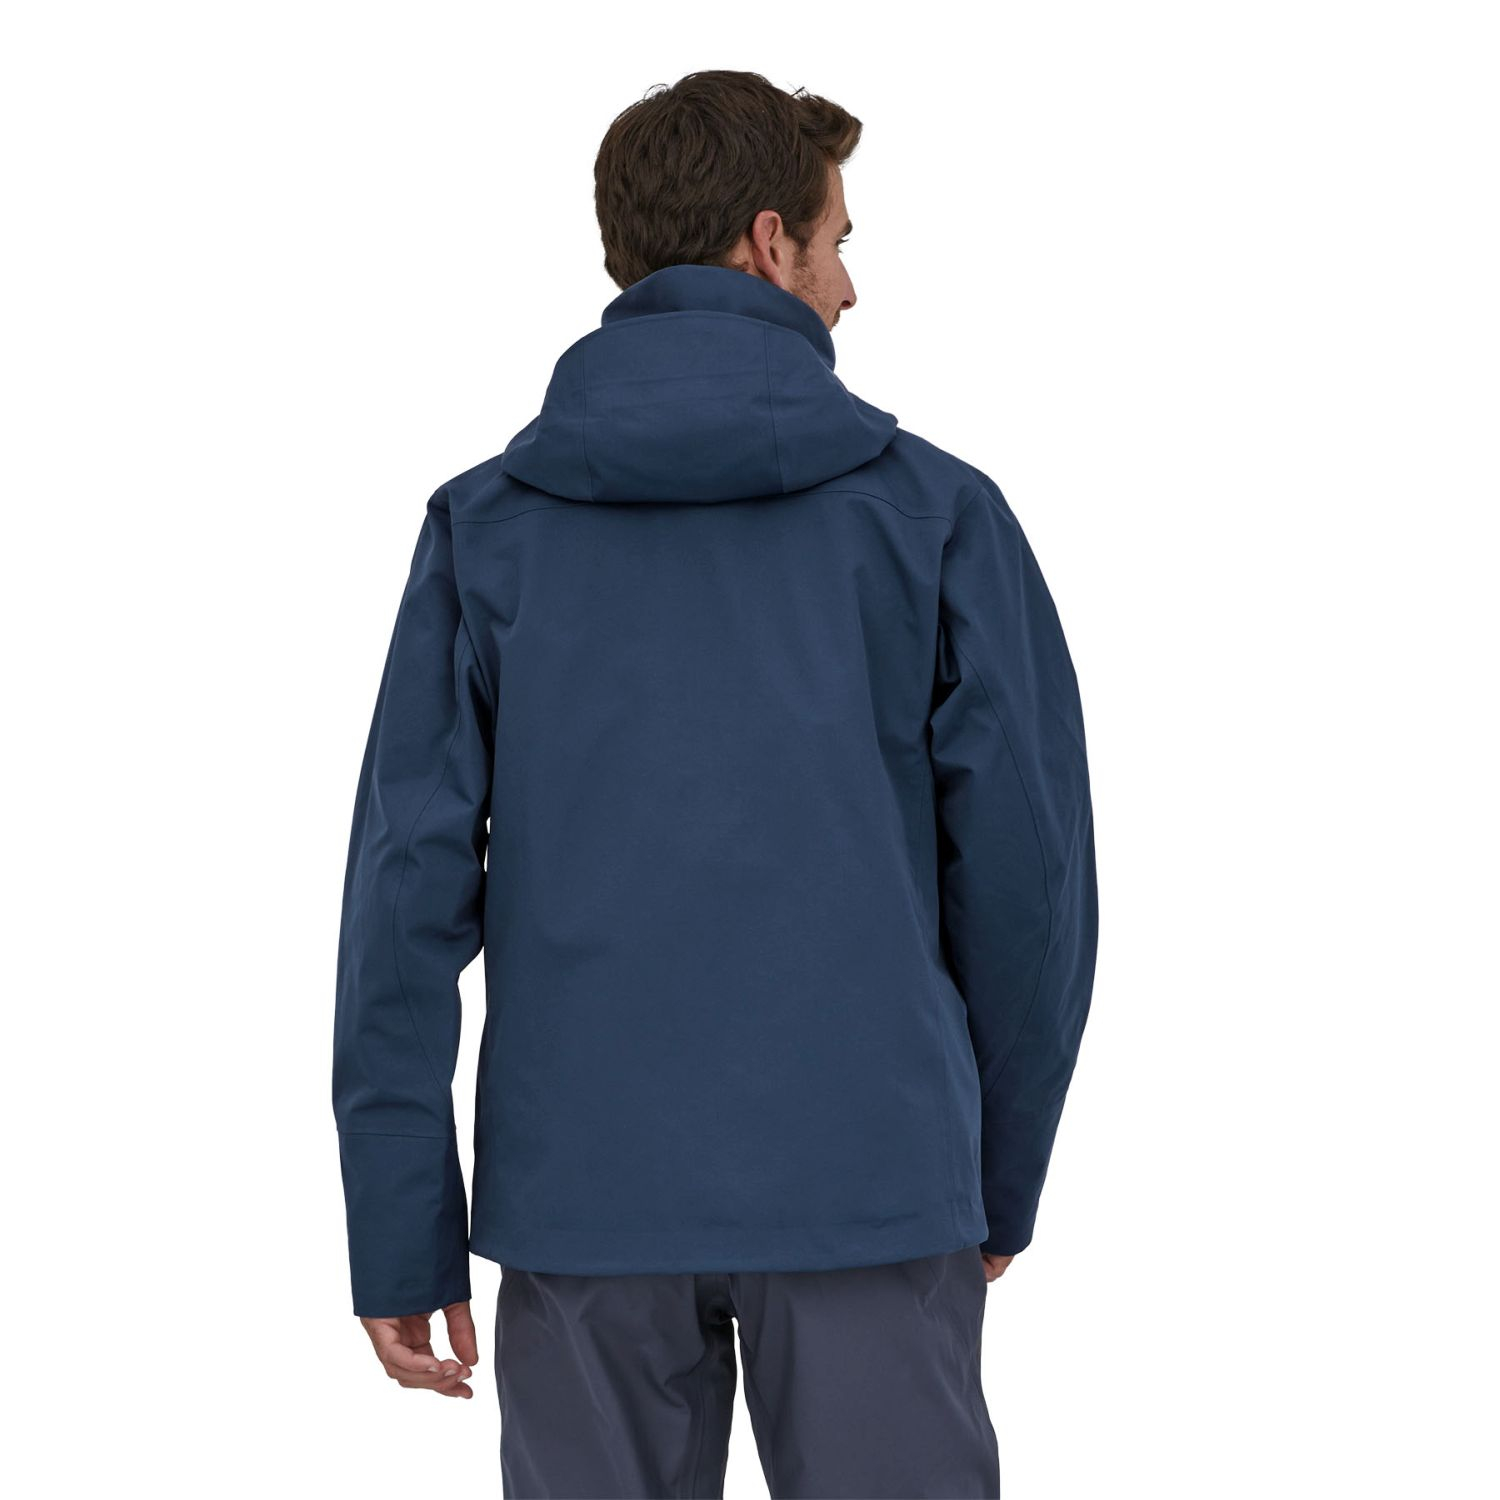 Swiftcurrent Jacket (tidepool blue)